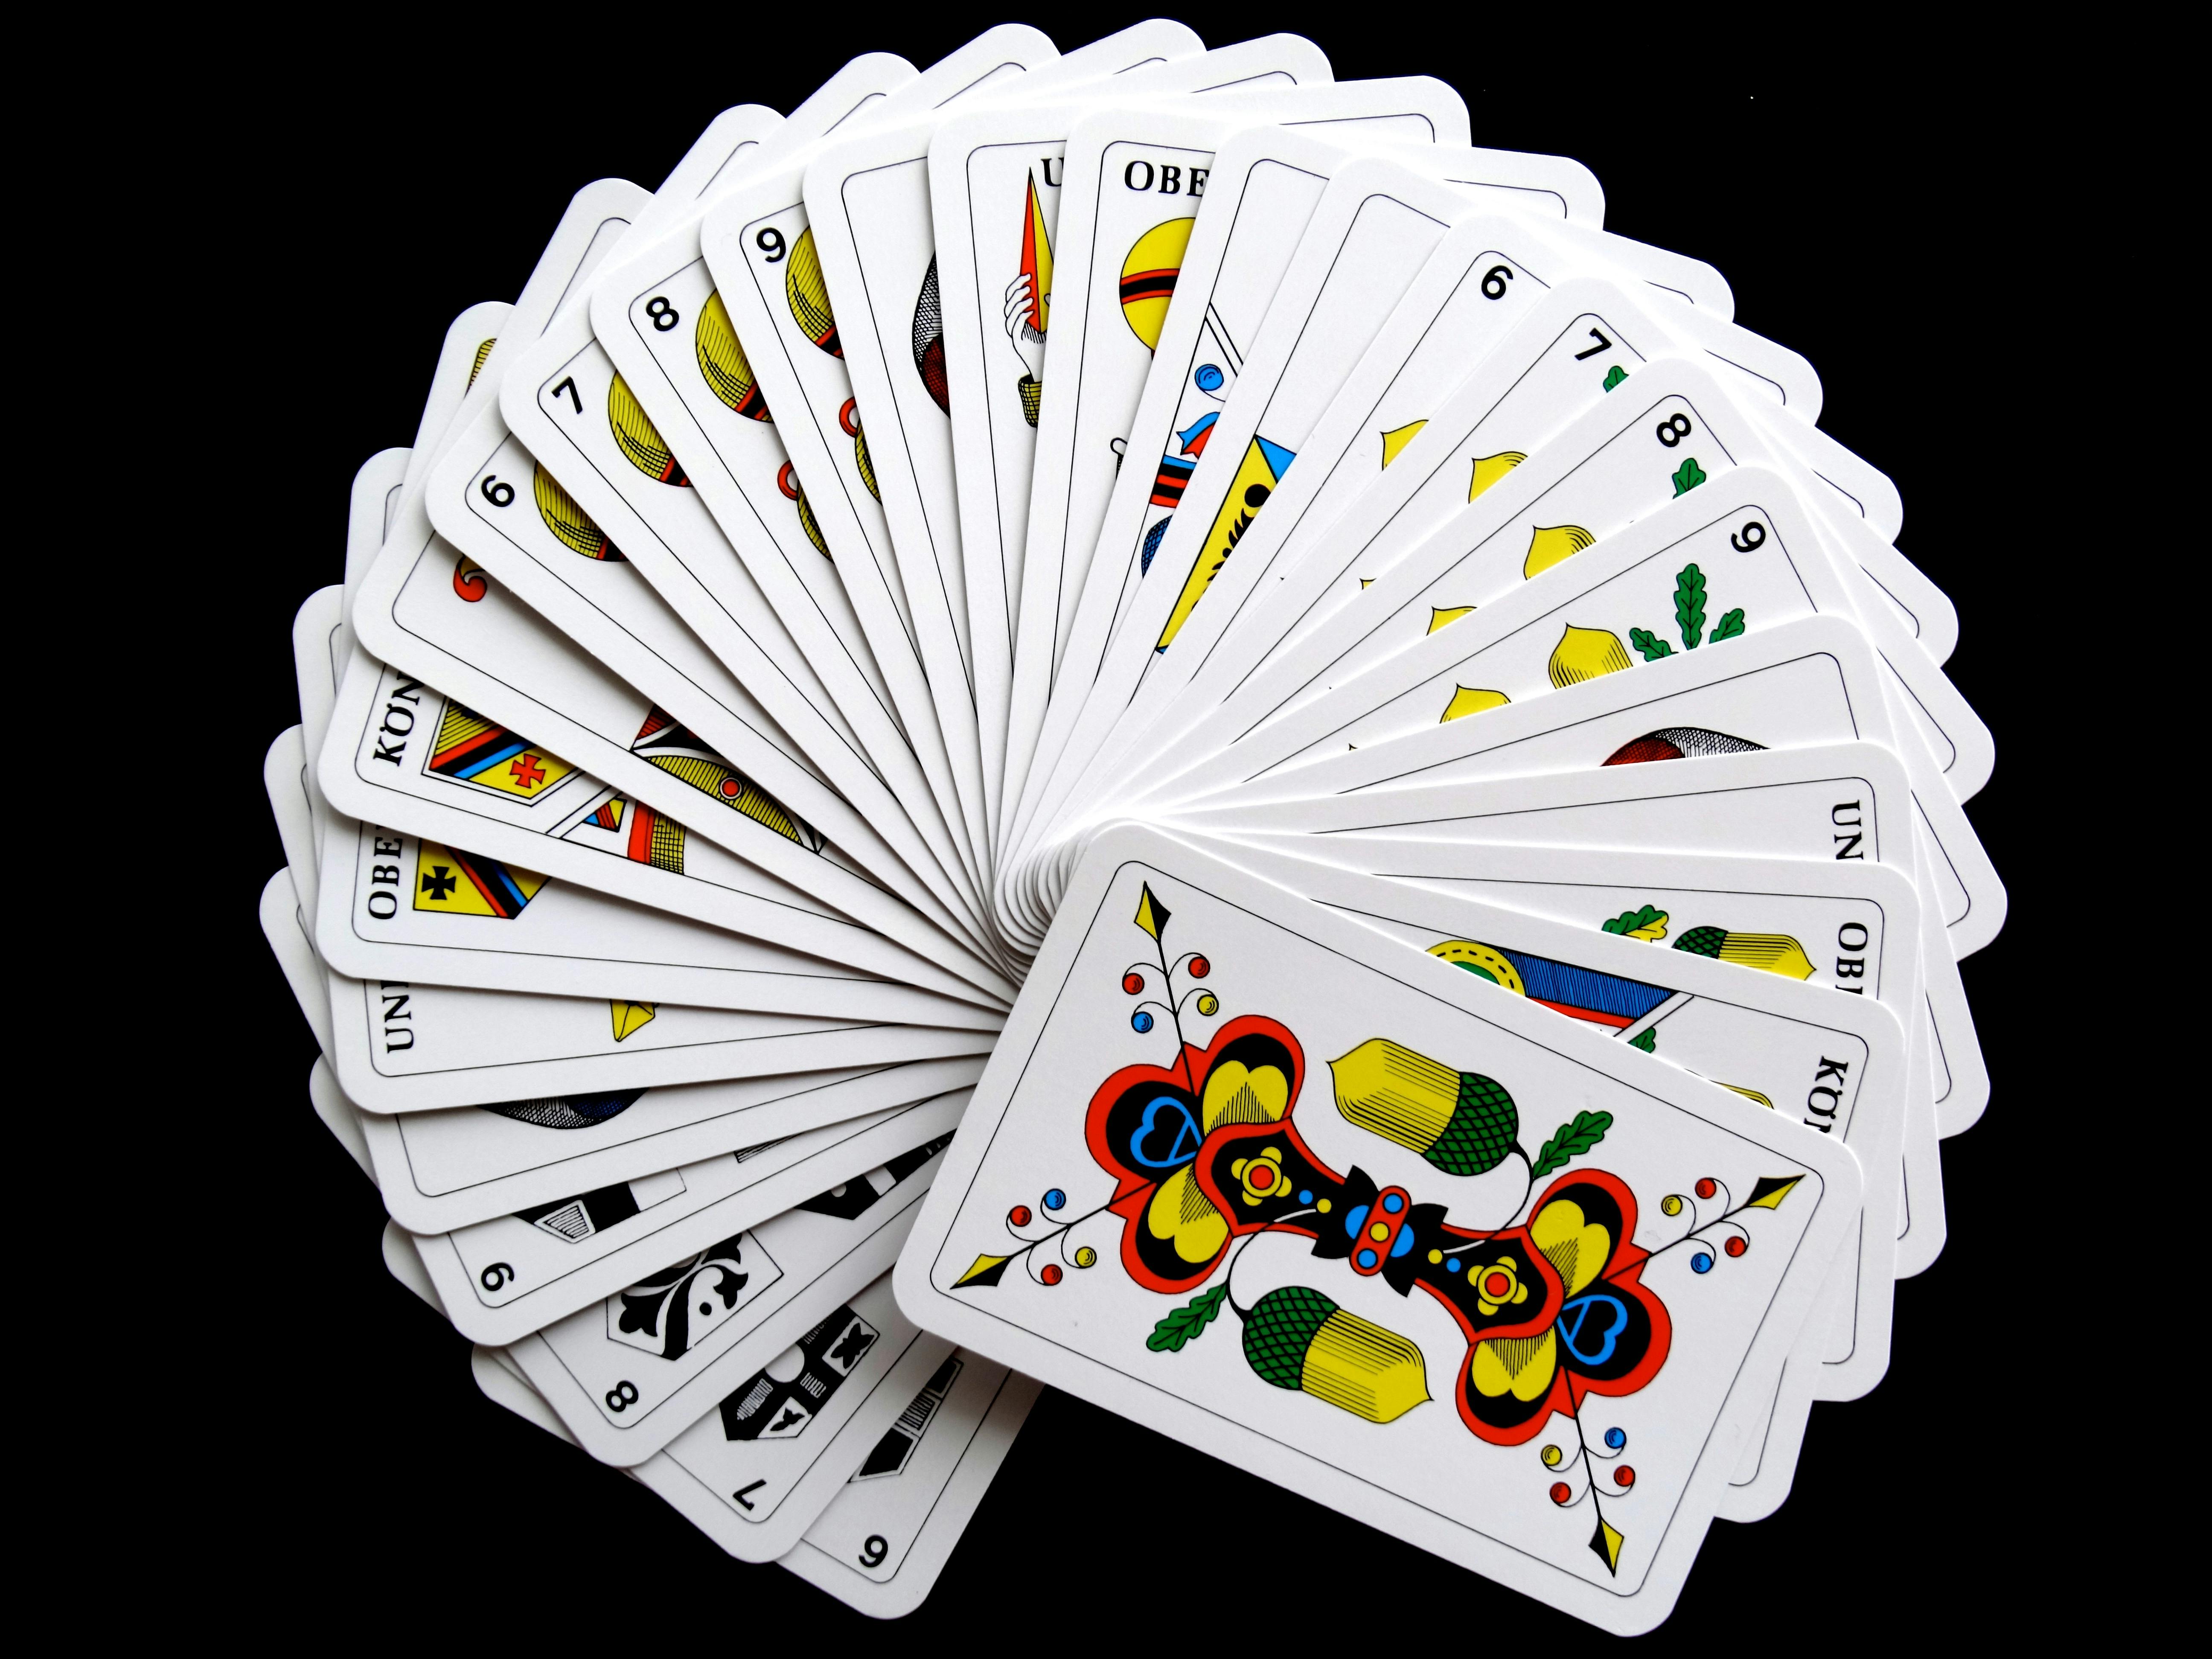 https://images.pexels.com/photos/39018/cards-jass-cards-card-game-strategy-39018.jpeg